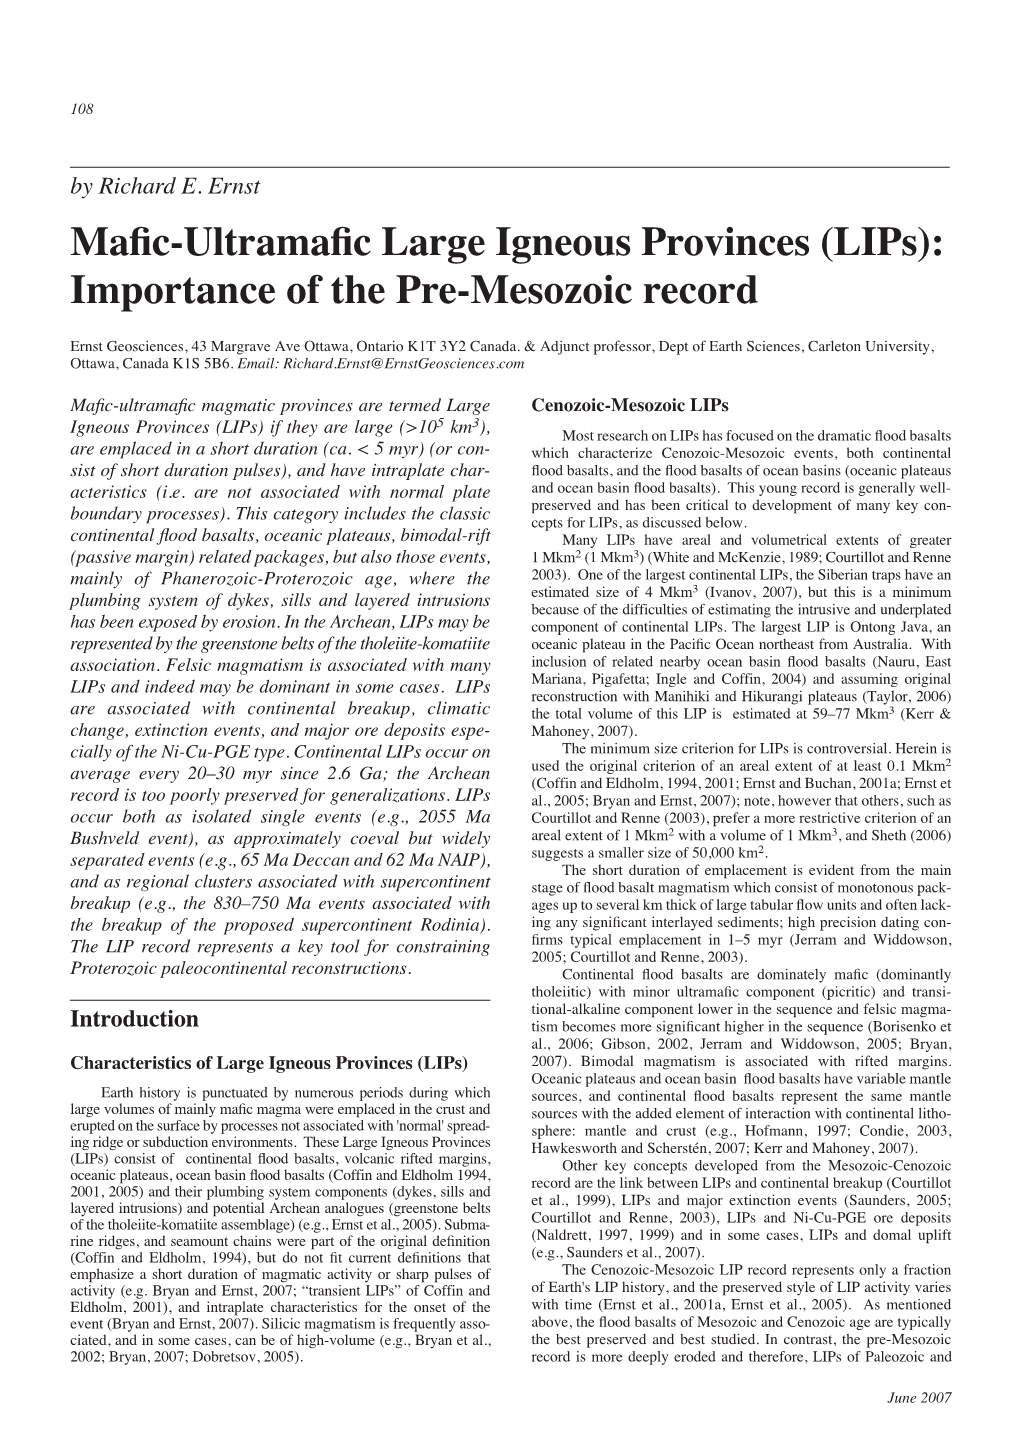 Mafic-Ultramafic Large Igneous Provinces